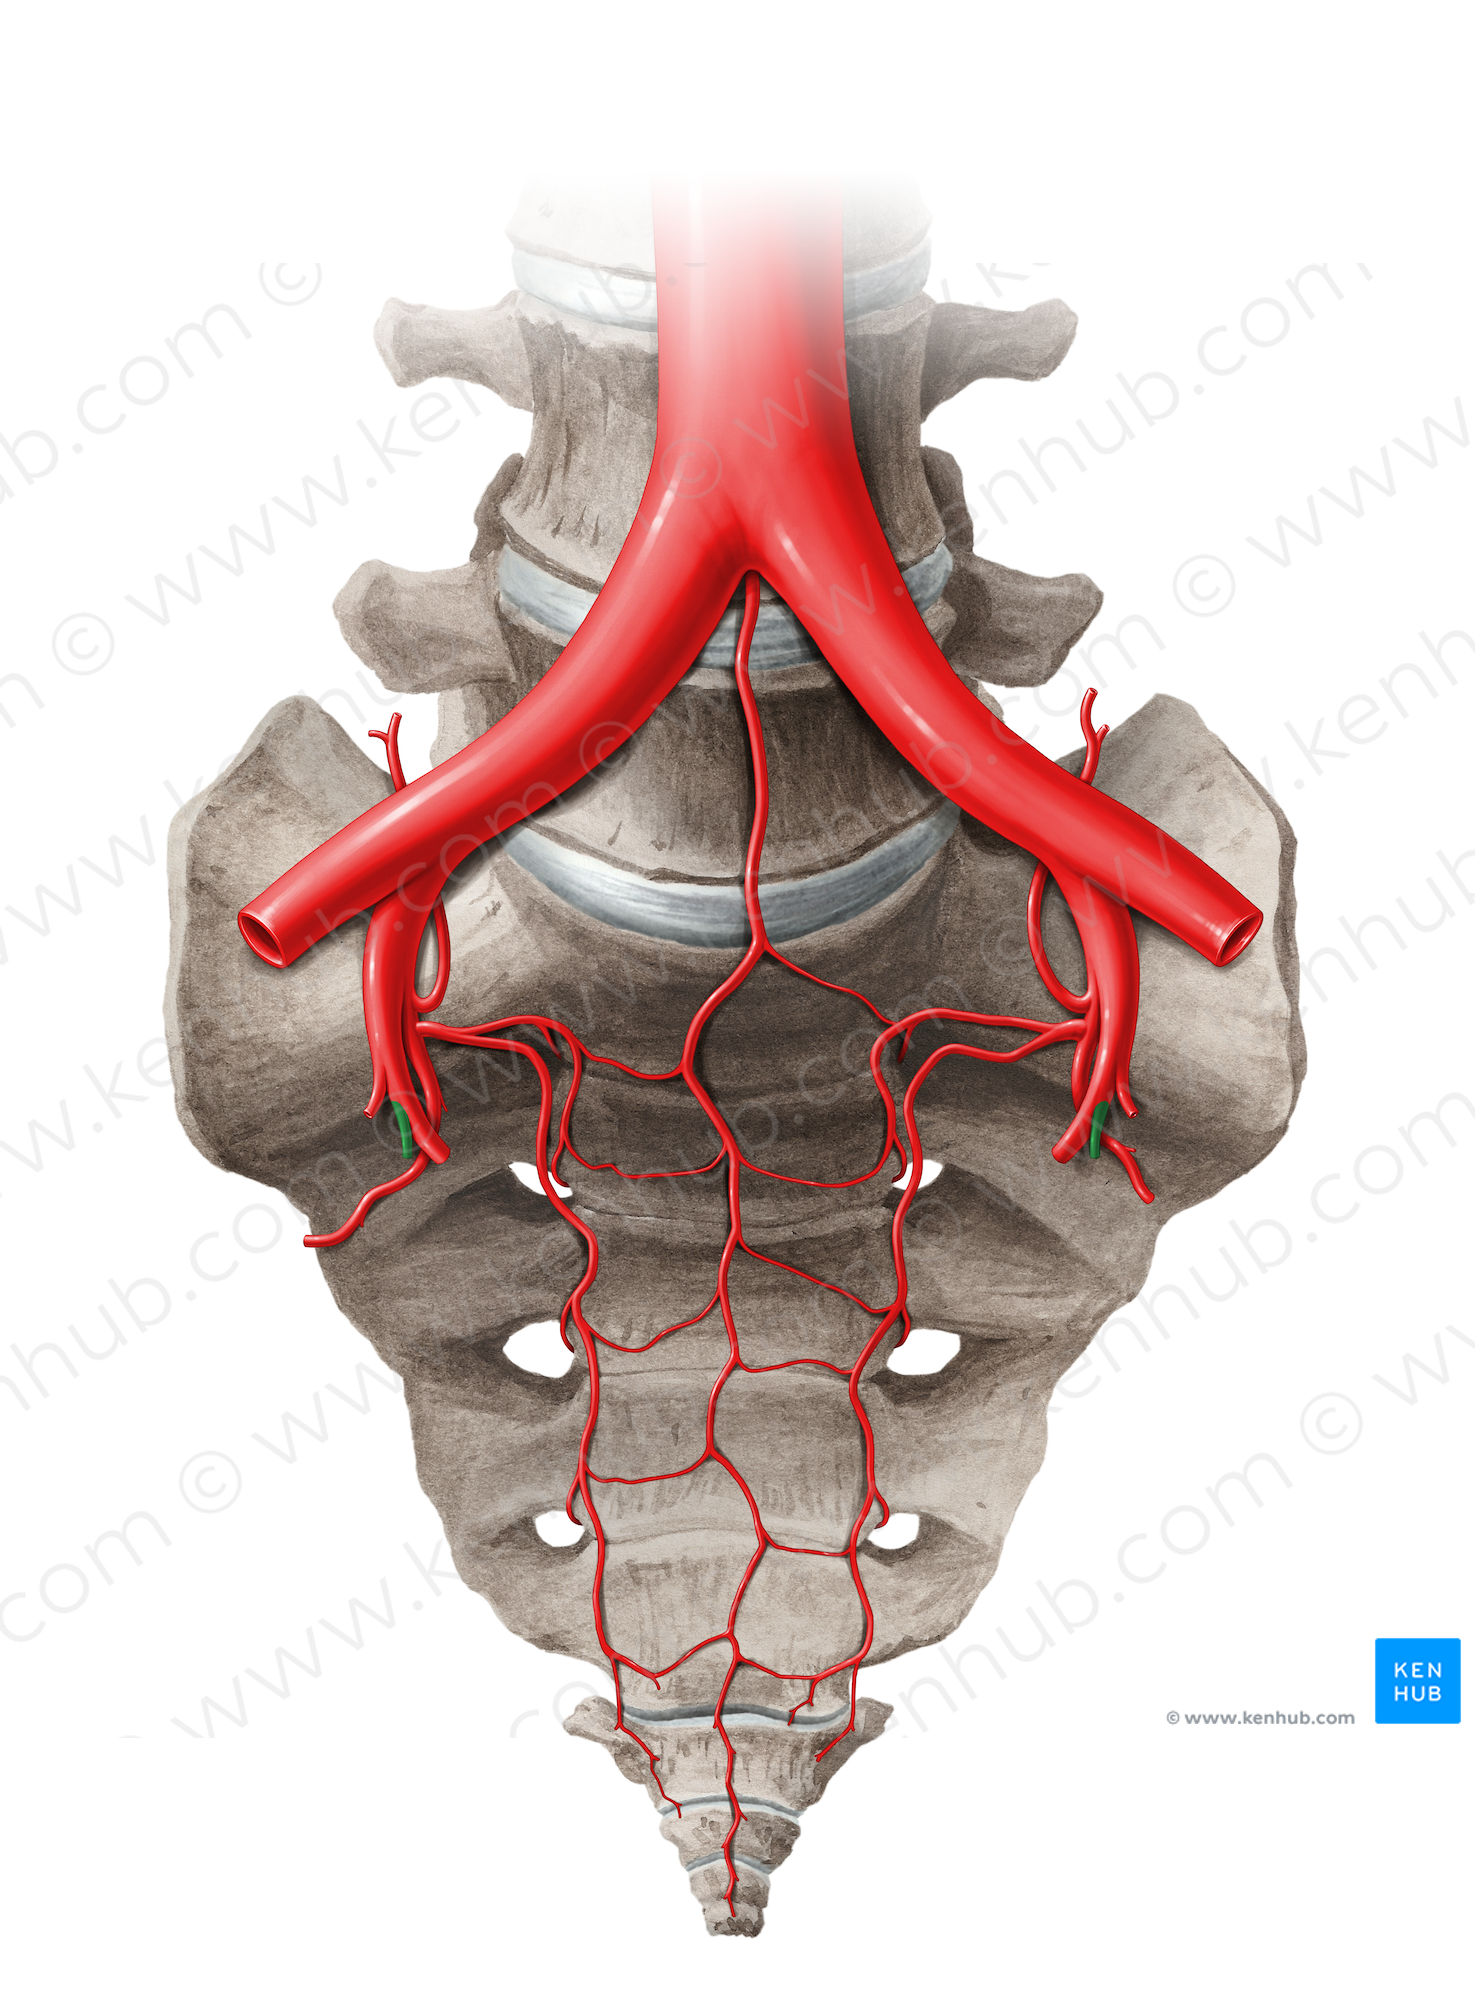 Obturator artery (#14059)